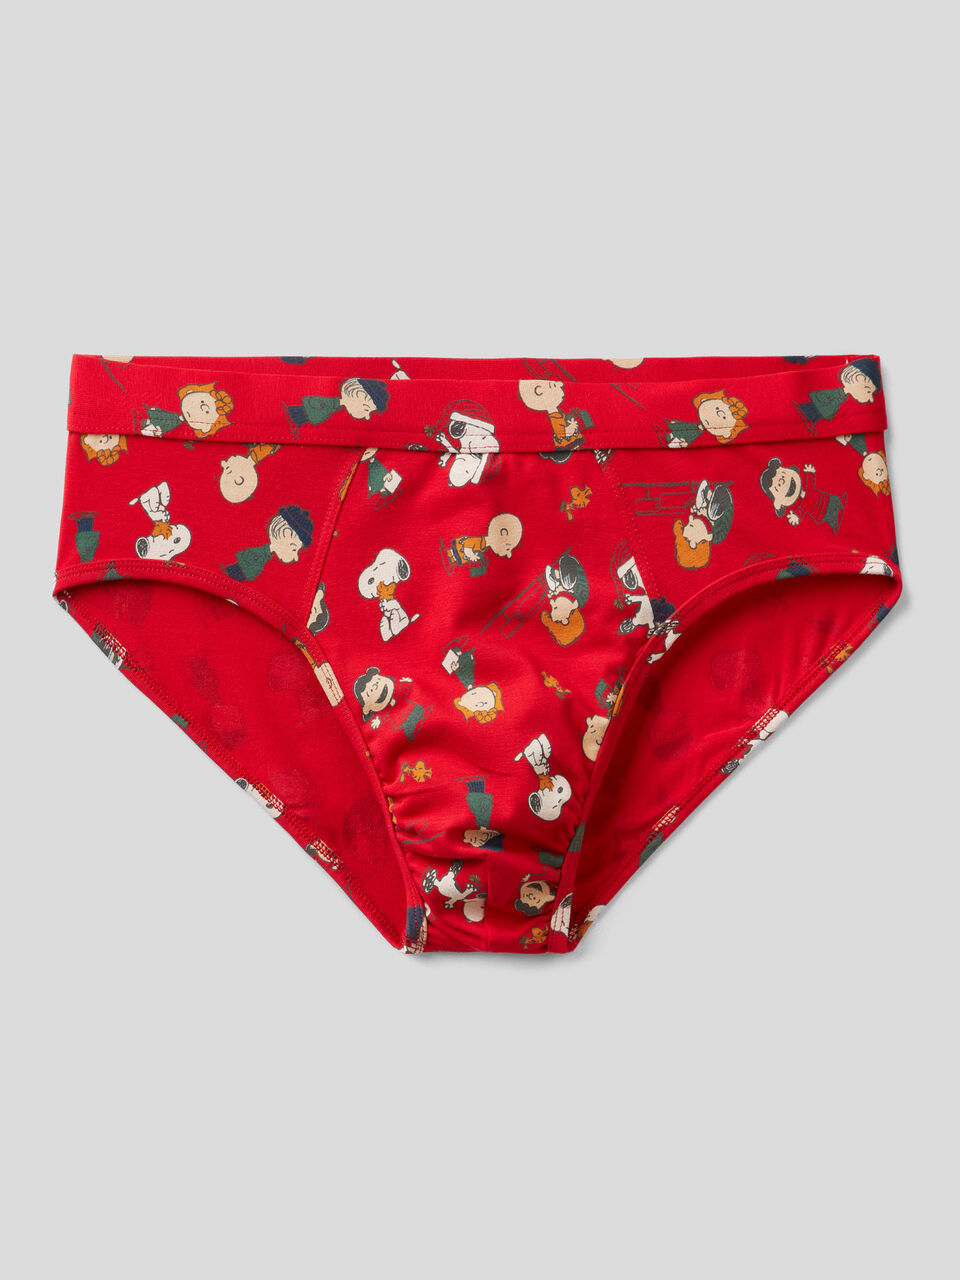 Peanuts Christmas underwear - Red